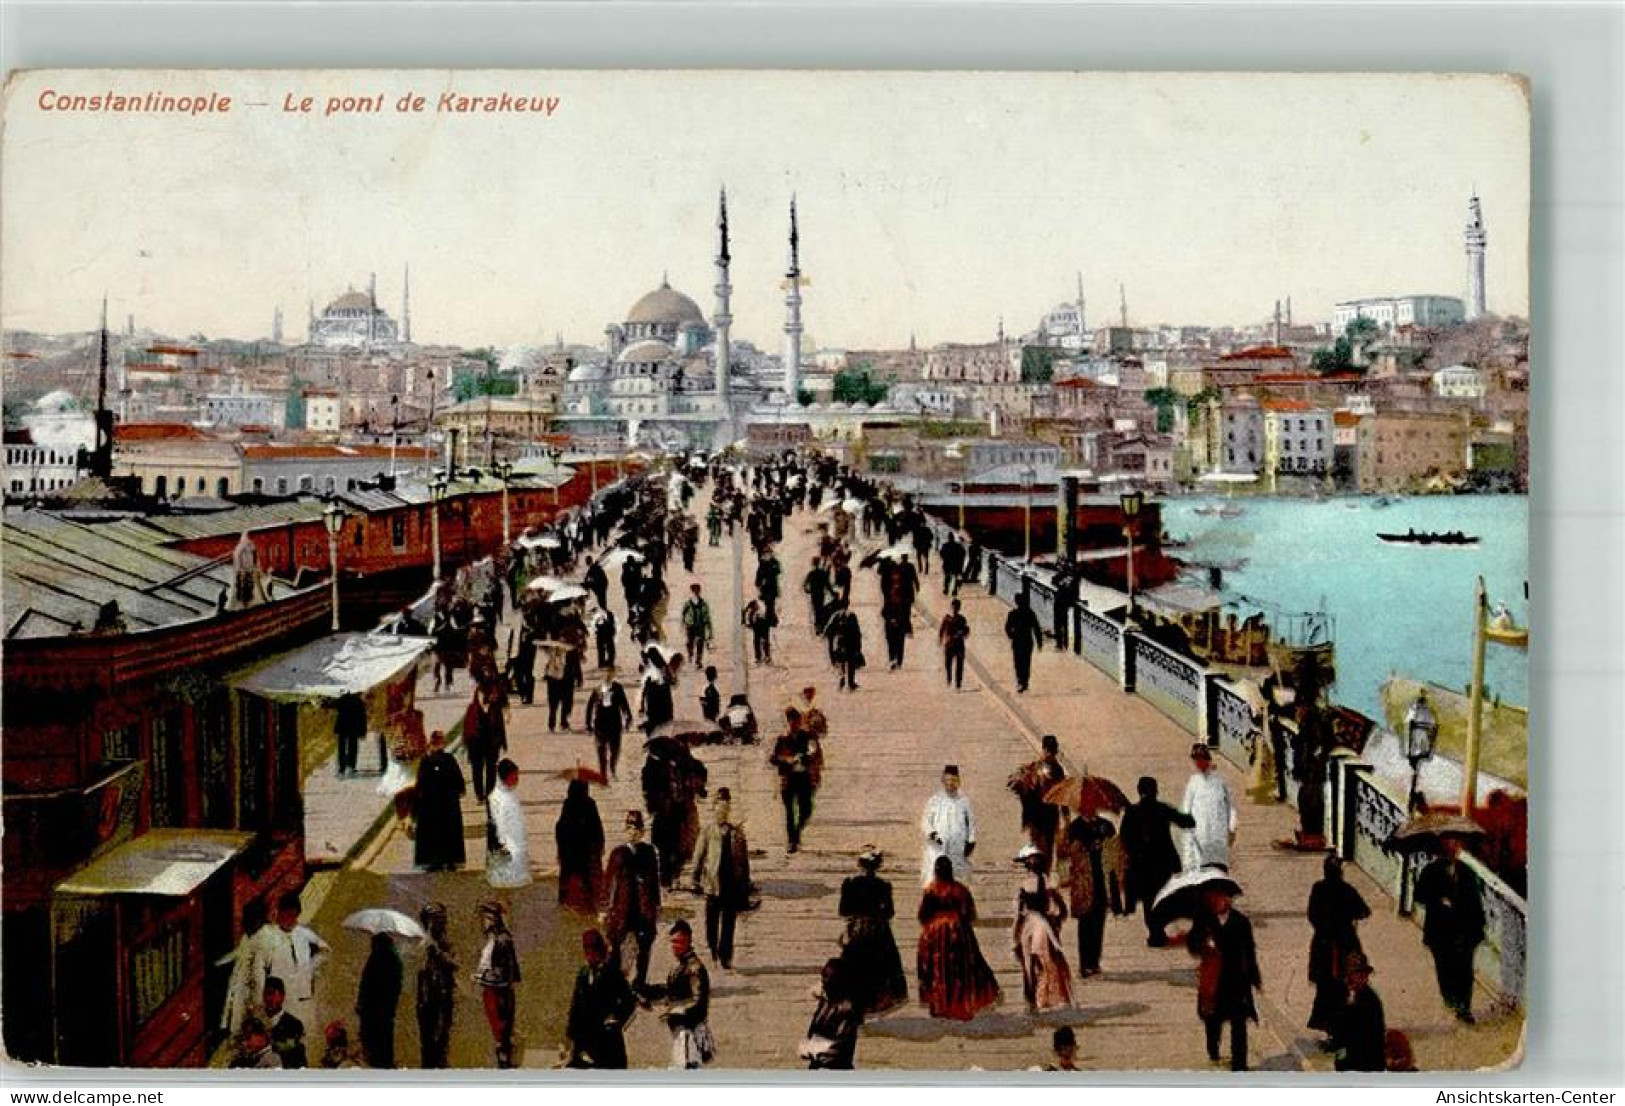 39830206 - Konstantinopel Istanbul - Constantine